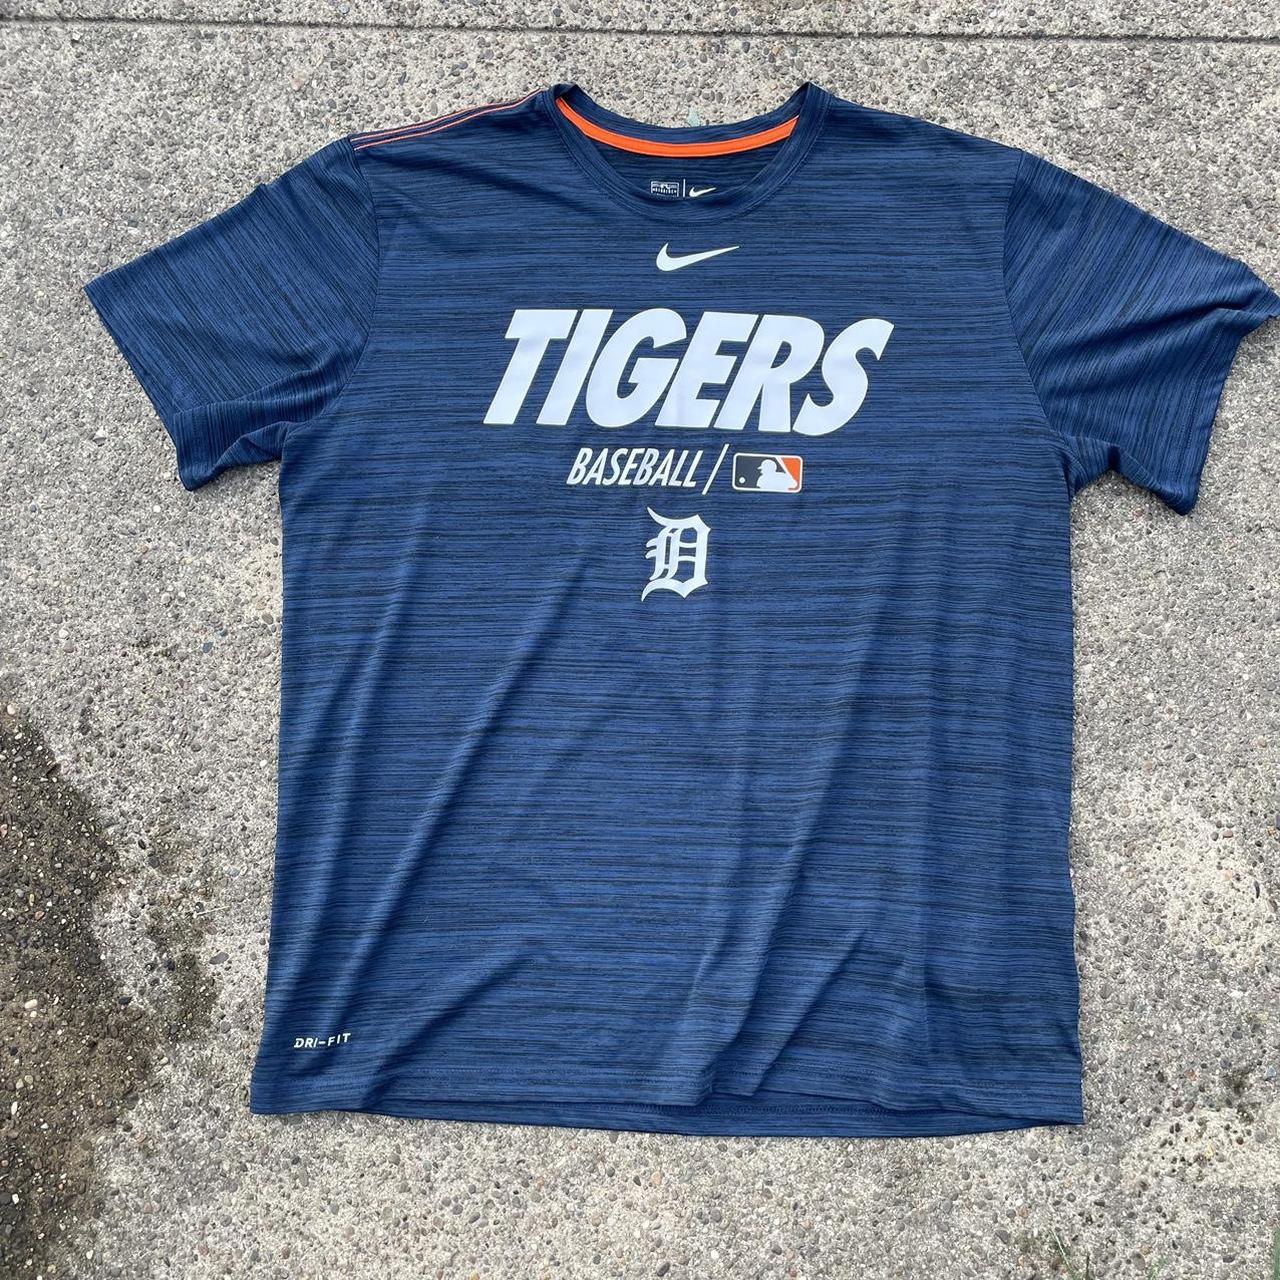 NIKE Men's MLB Detroit Tigers Baseball Navy Blue DRI-FIT Jersey T-Shirt  Shirt XL